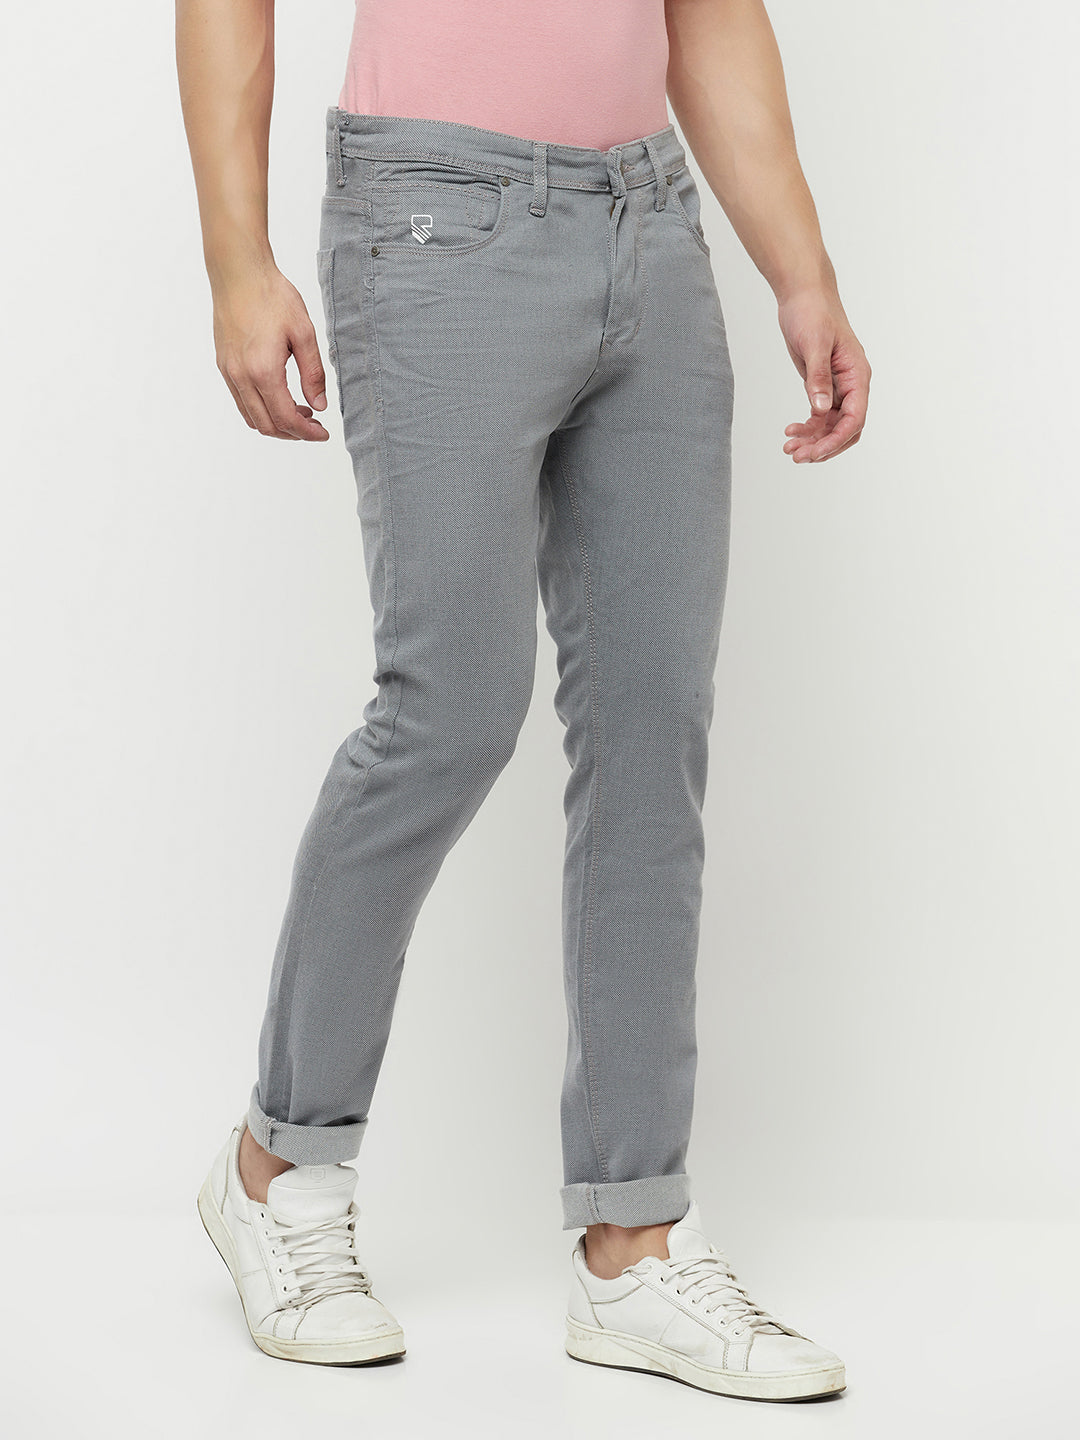 The Naples Jean in Grey Selvedge